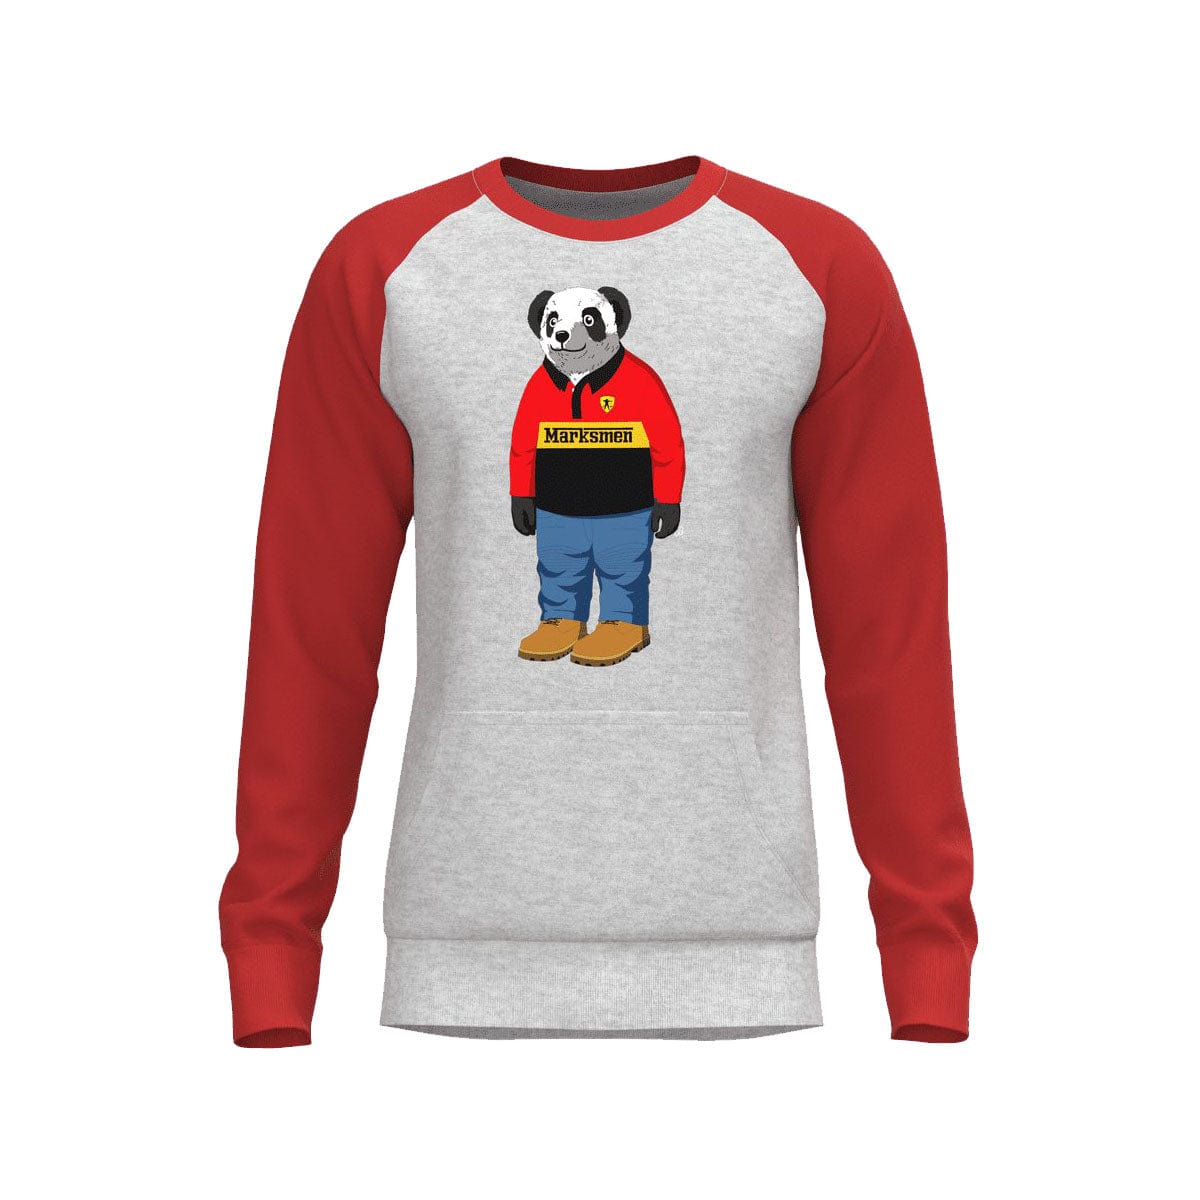 J.Hinton Collections Men's Marksmenari Panda Sweatshirt